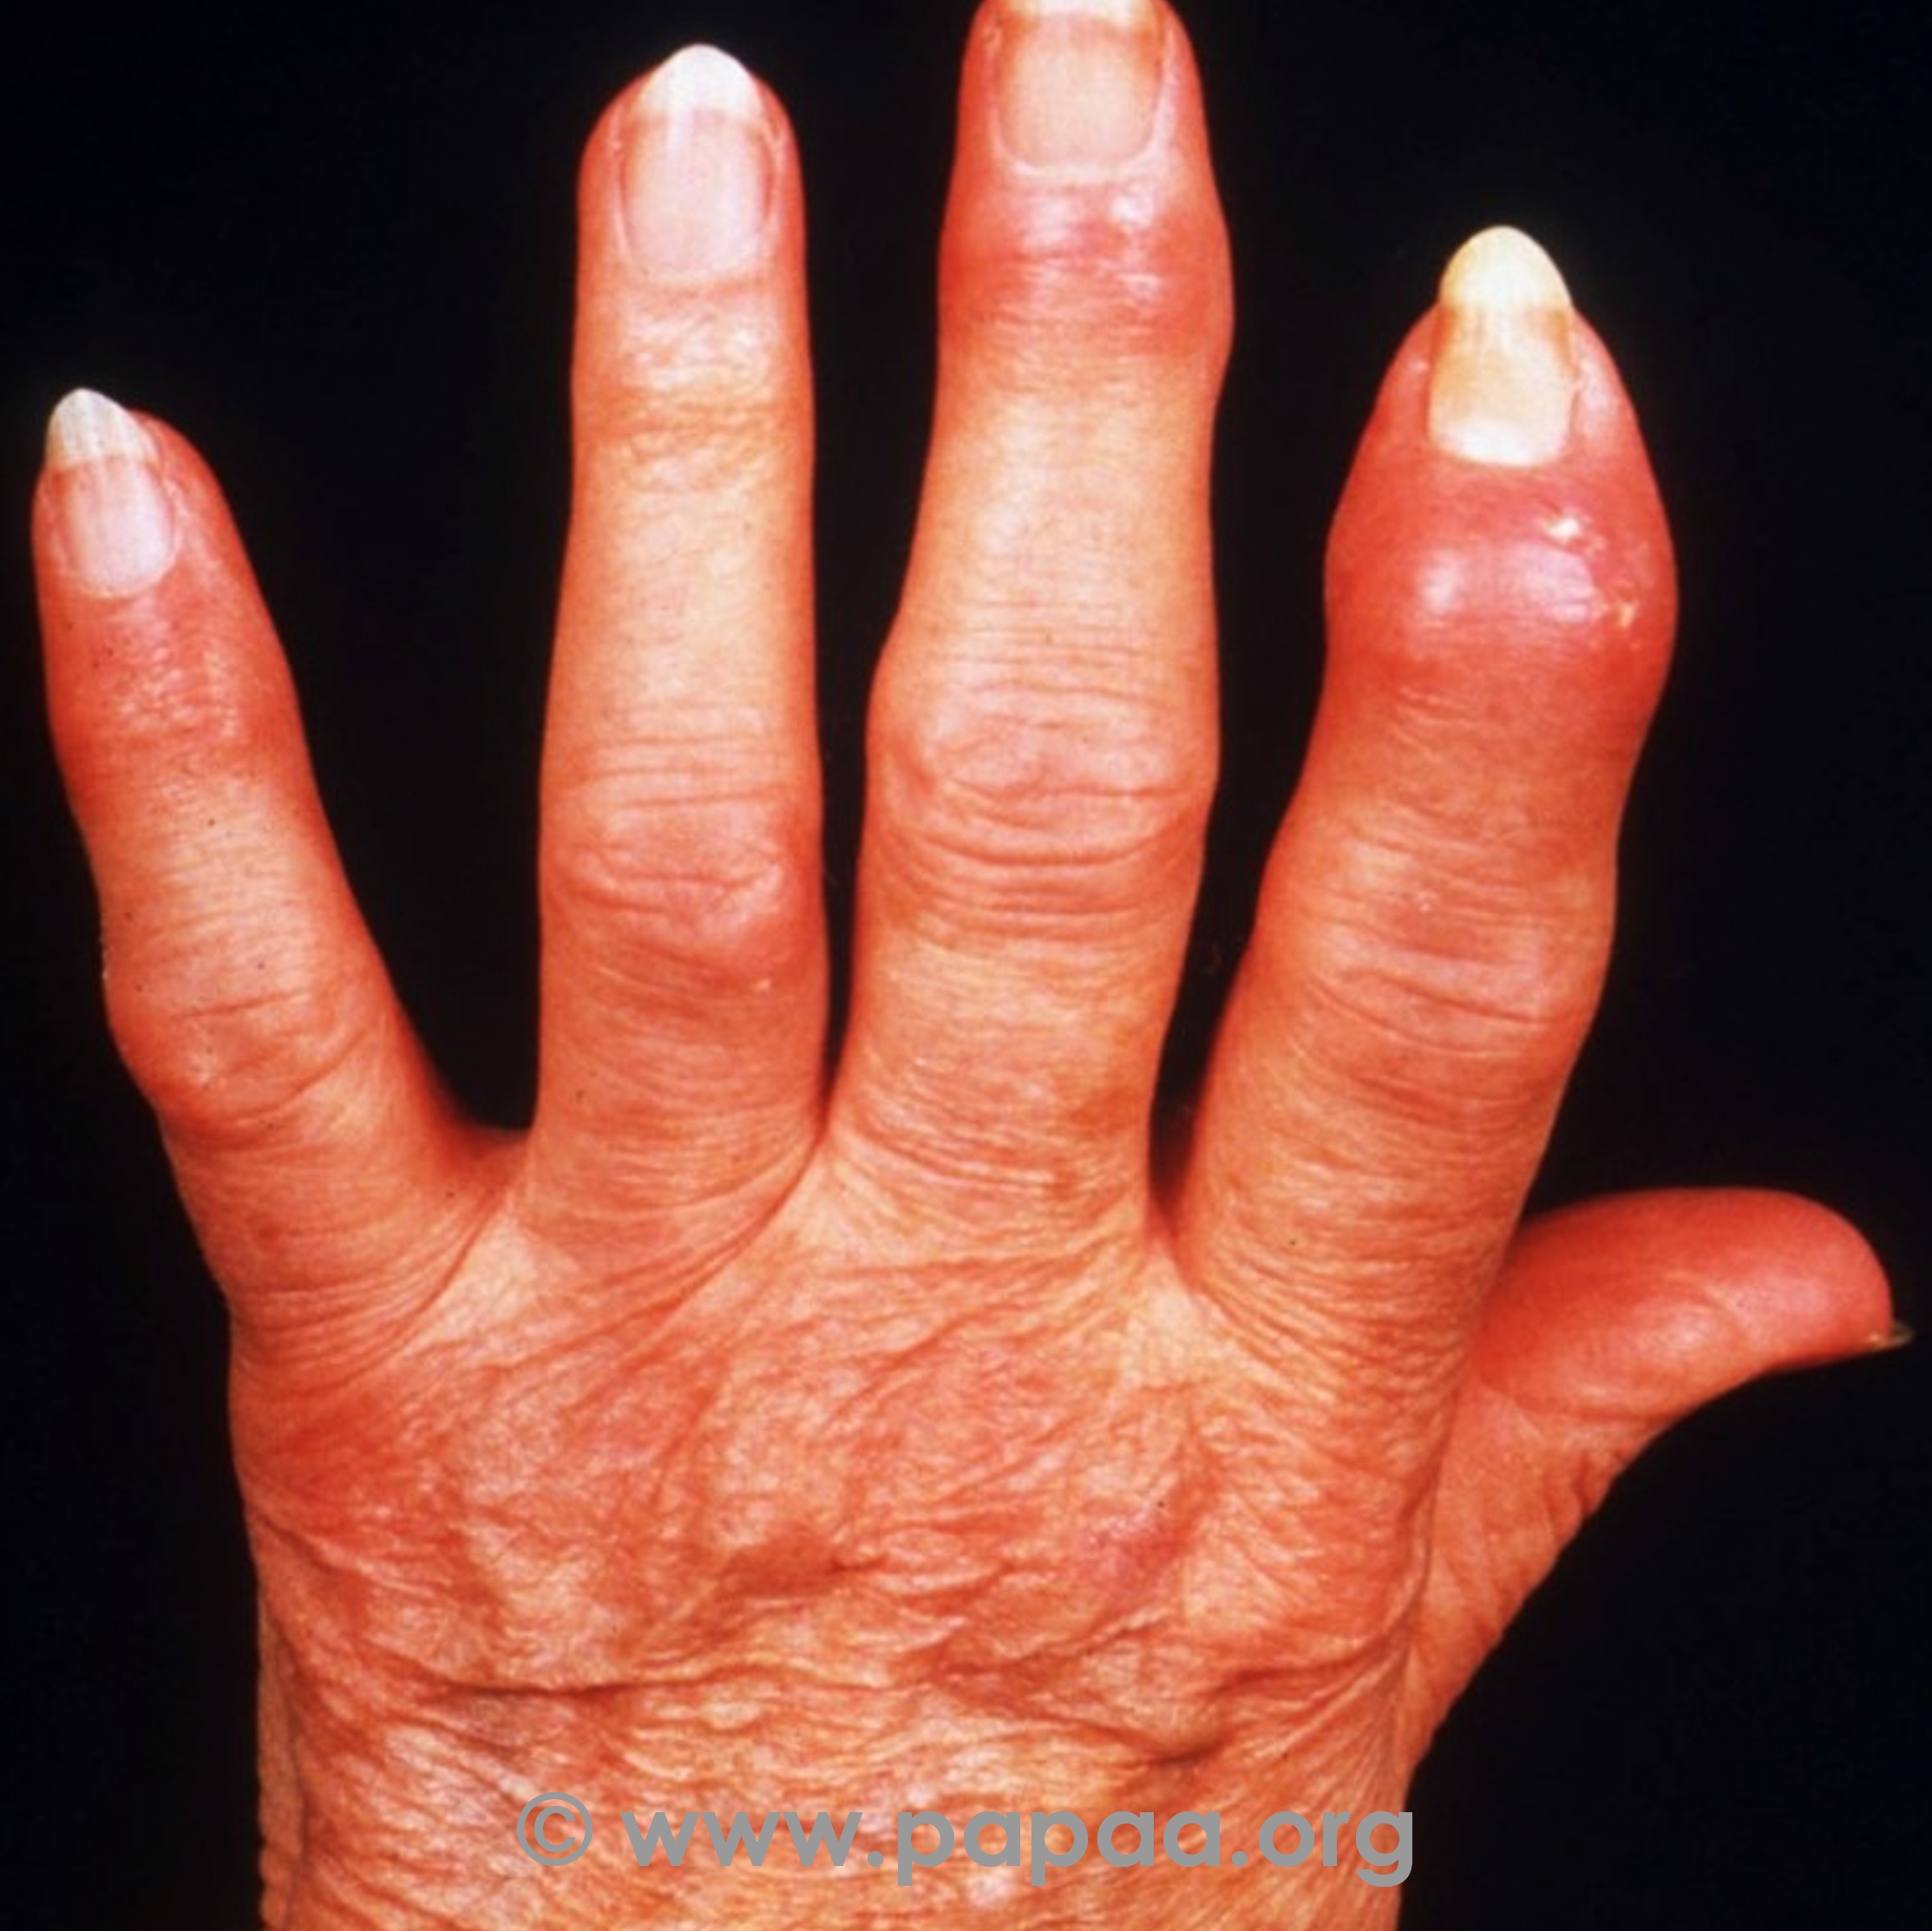 Psoriatic arthritis (PsA) 'sausage digits'